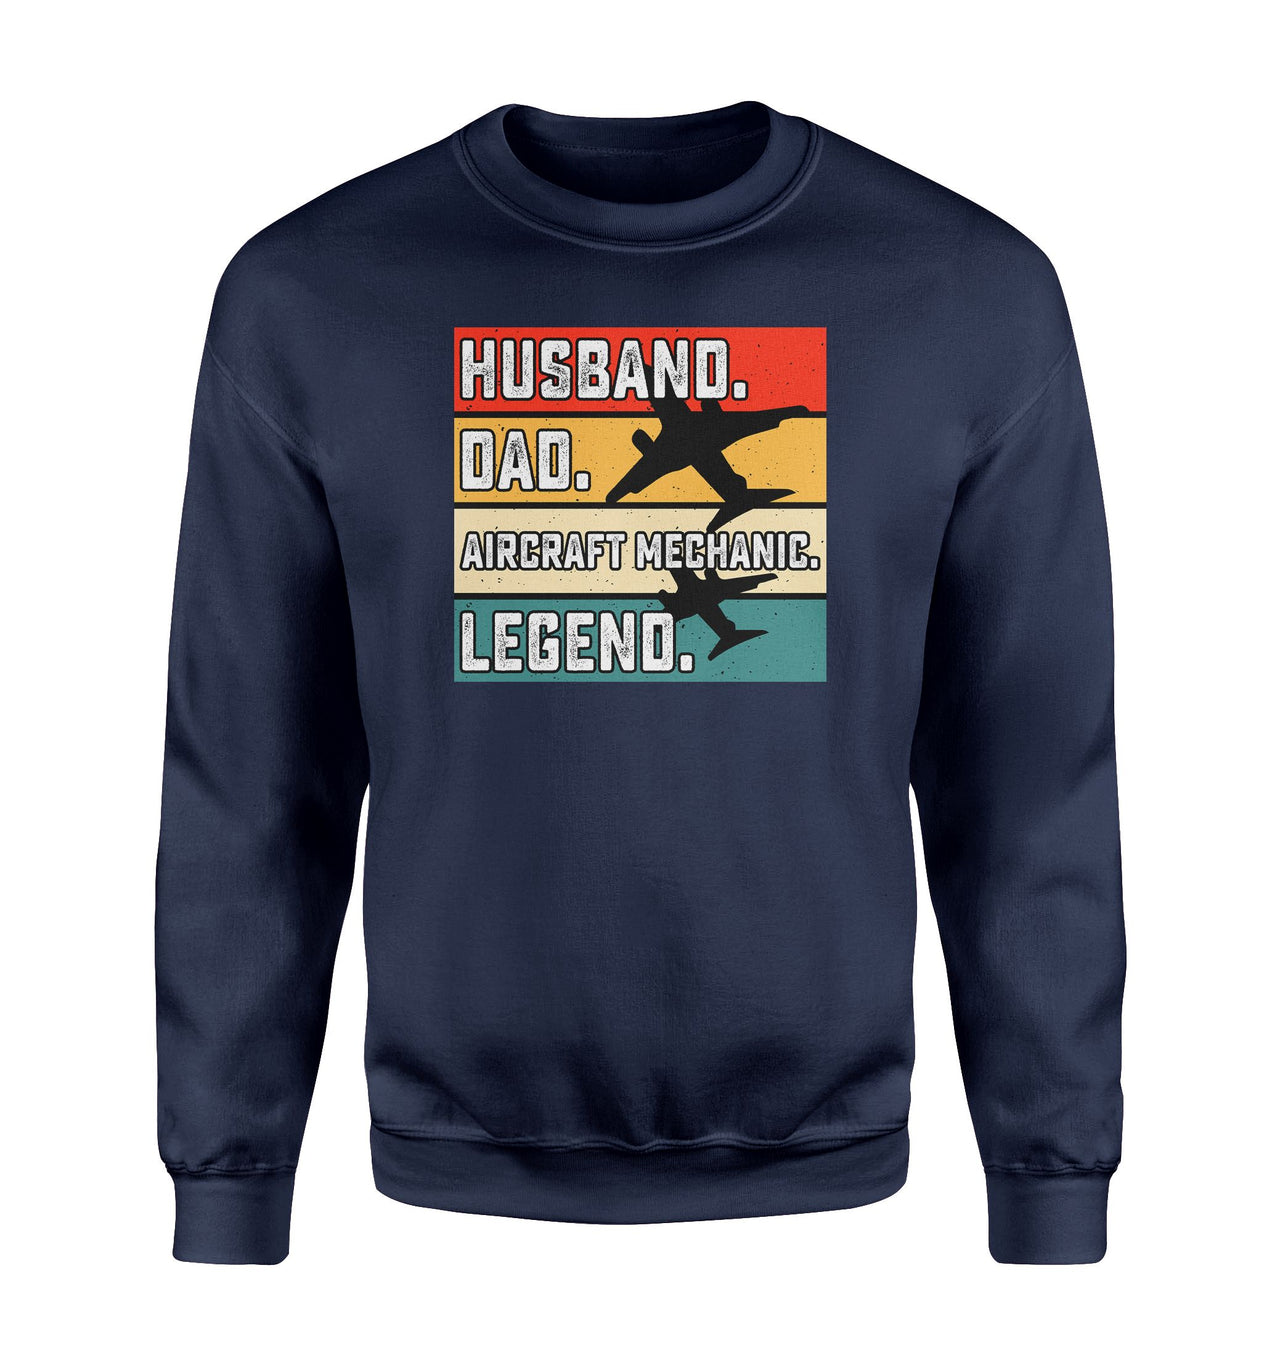 Husband & Dad & Aircraft Mechanic & Legend Designed Sweatshirts